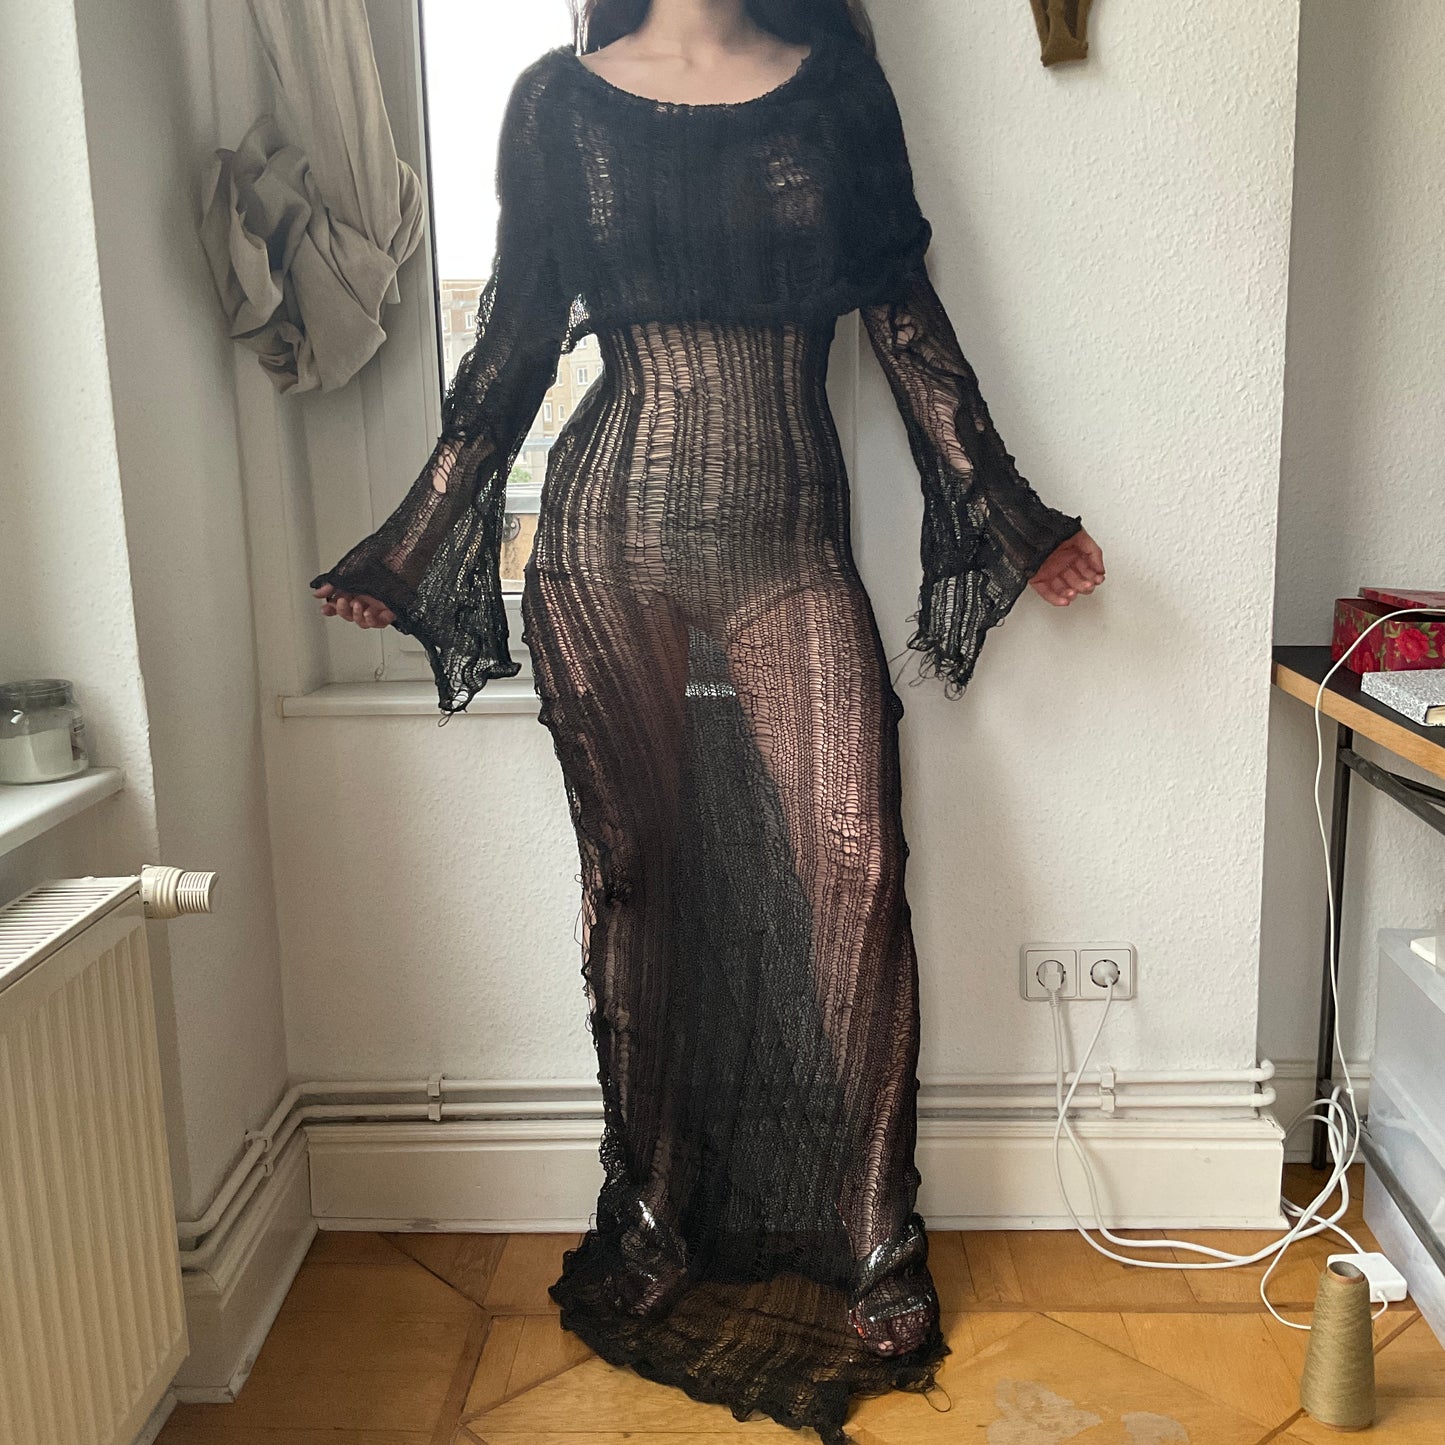 gargarox ~ Black widow gown